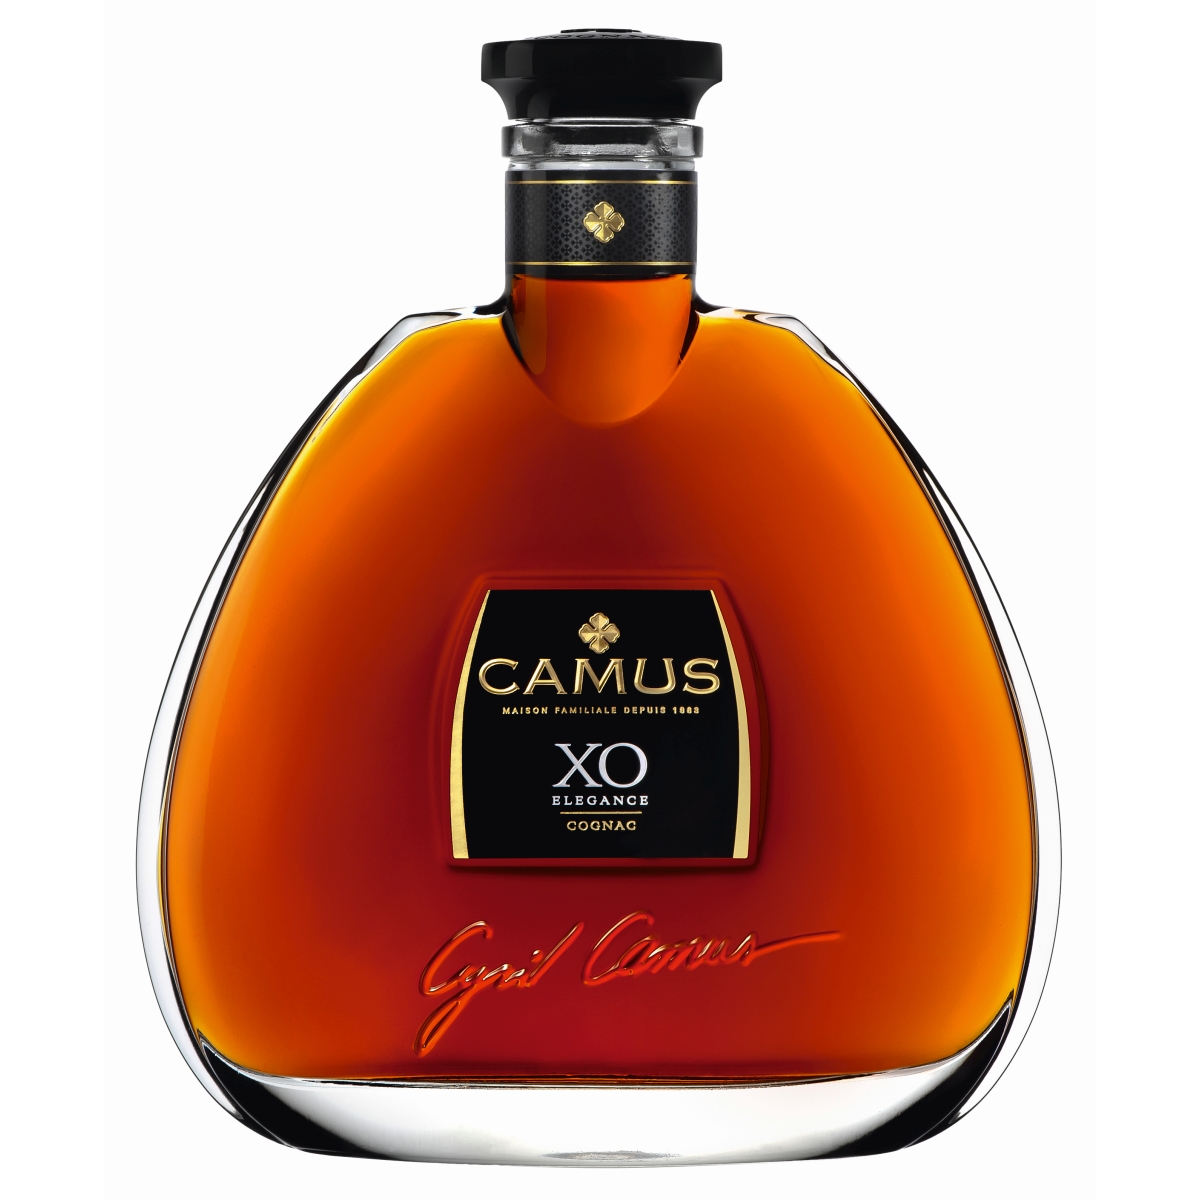 Camus XO Elegance Cognac | 70cl